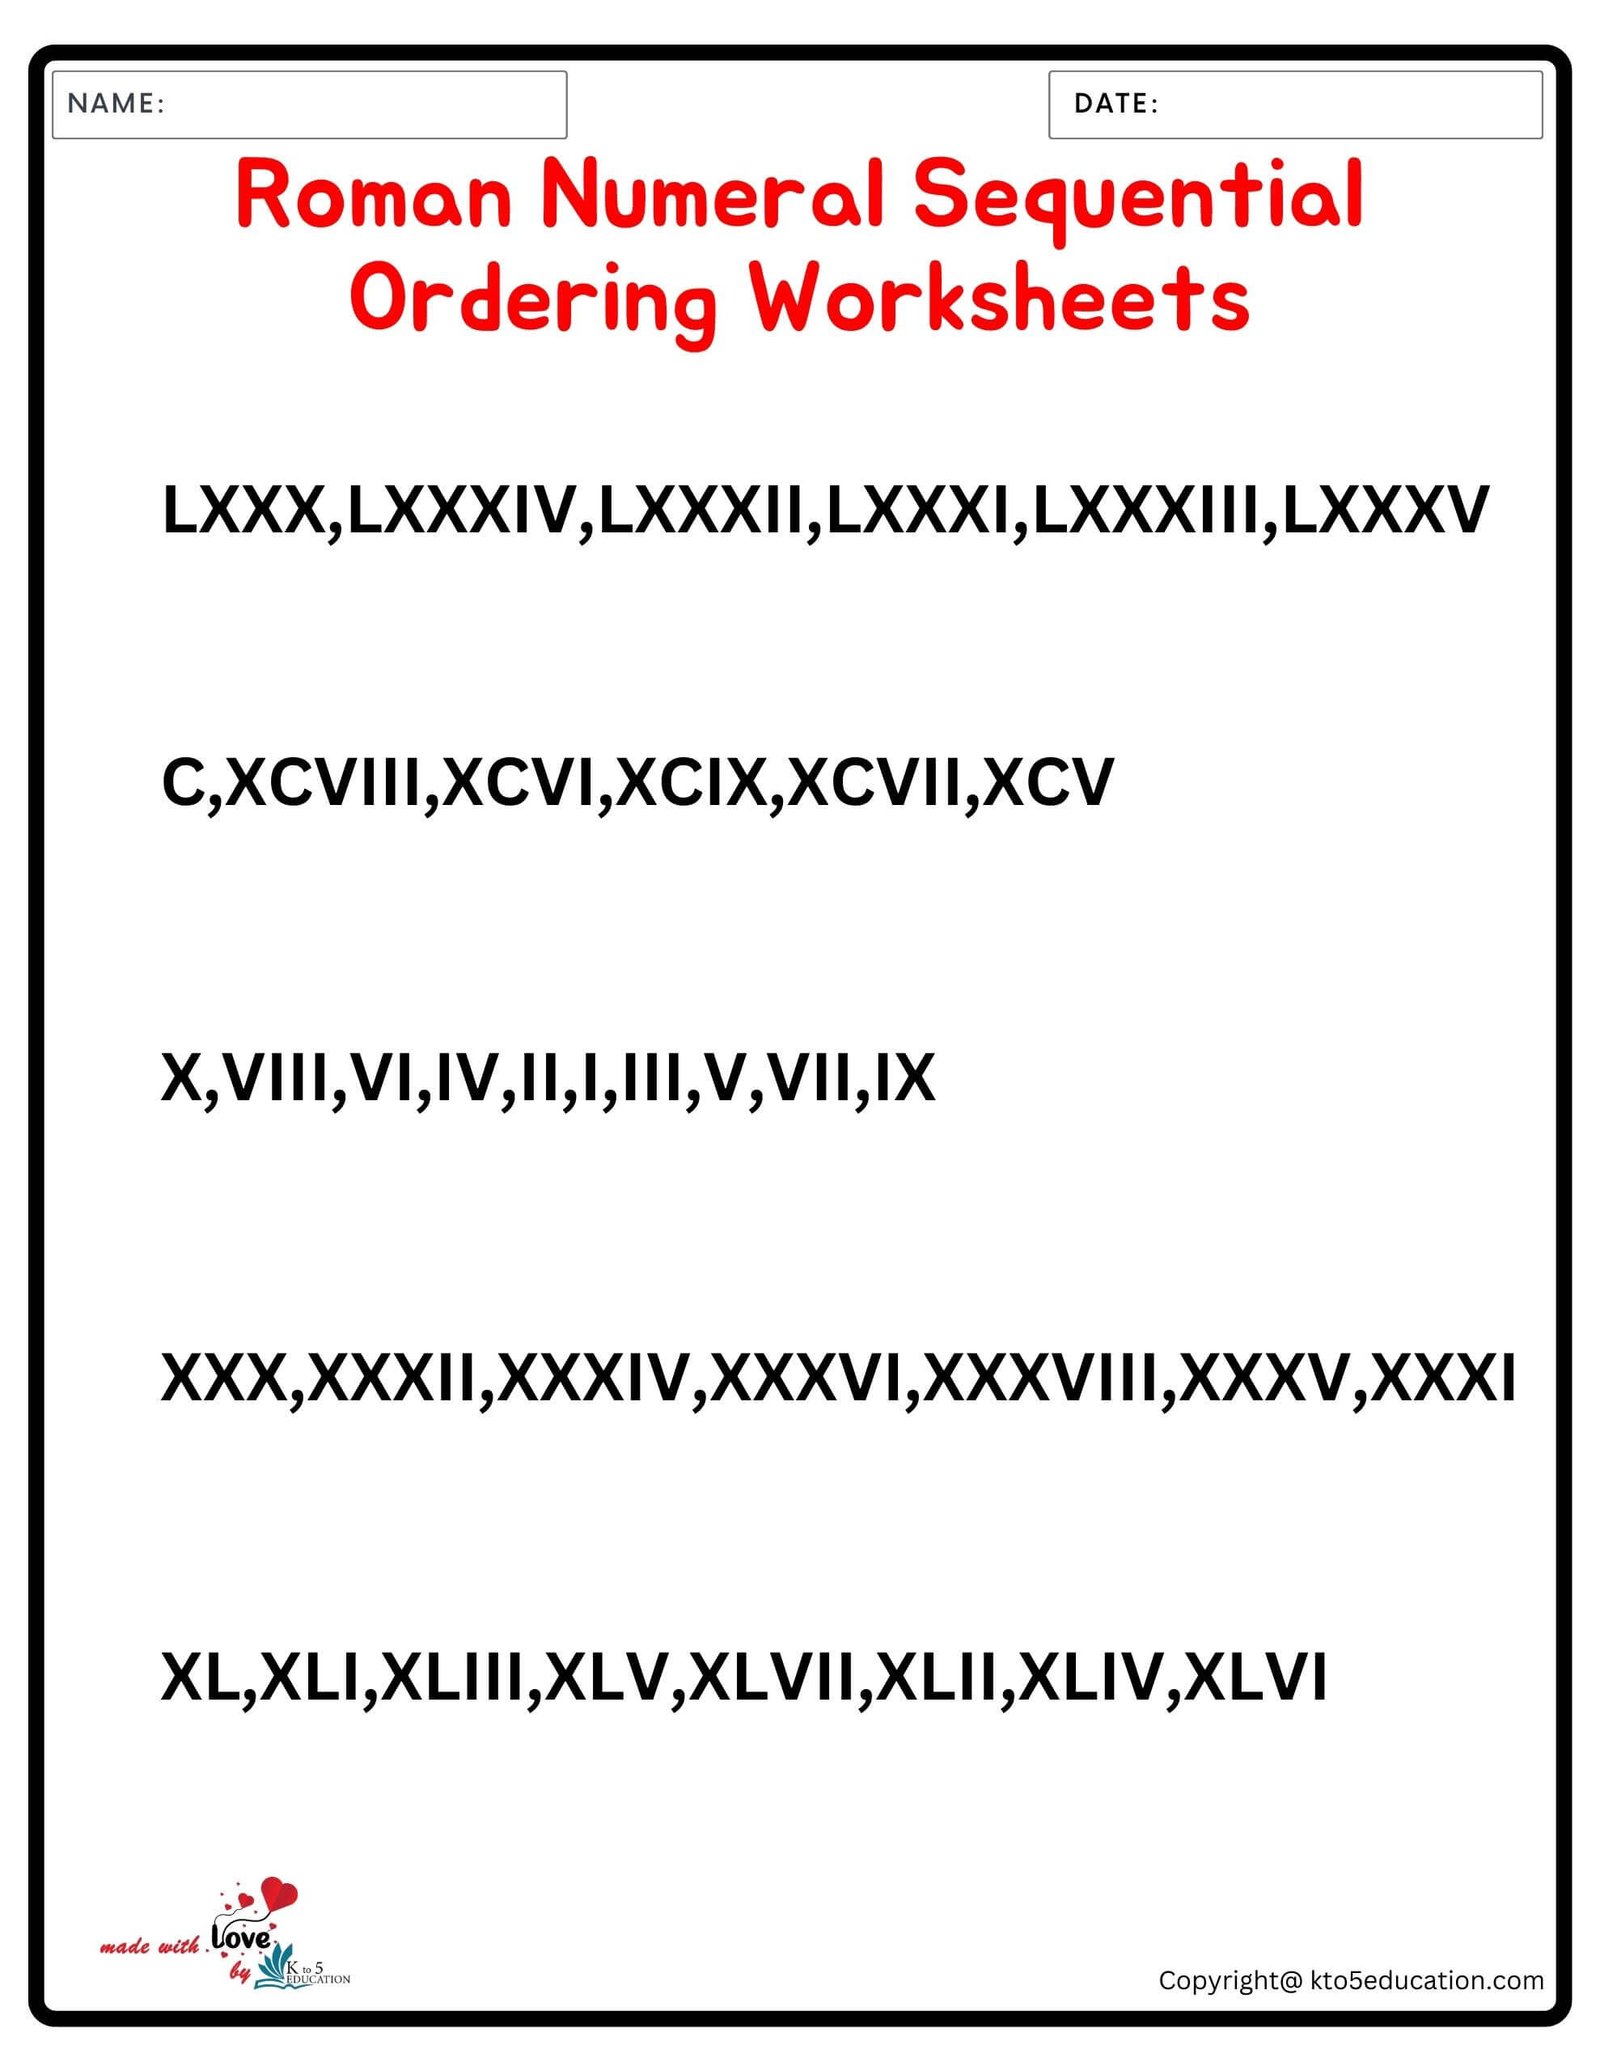 Roman Numeral Number Ascending Ordering Worksheets Clock Worksheet 1 TO 100